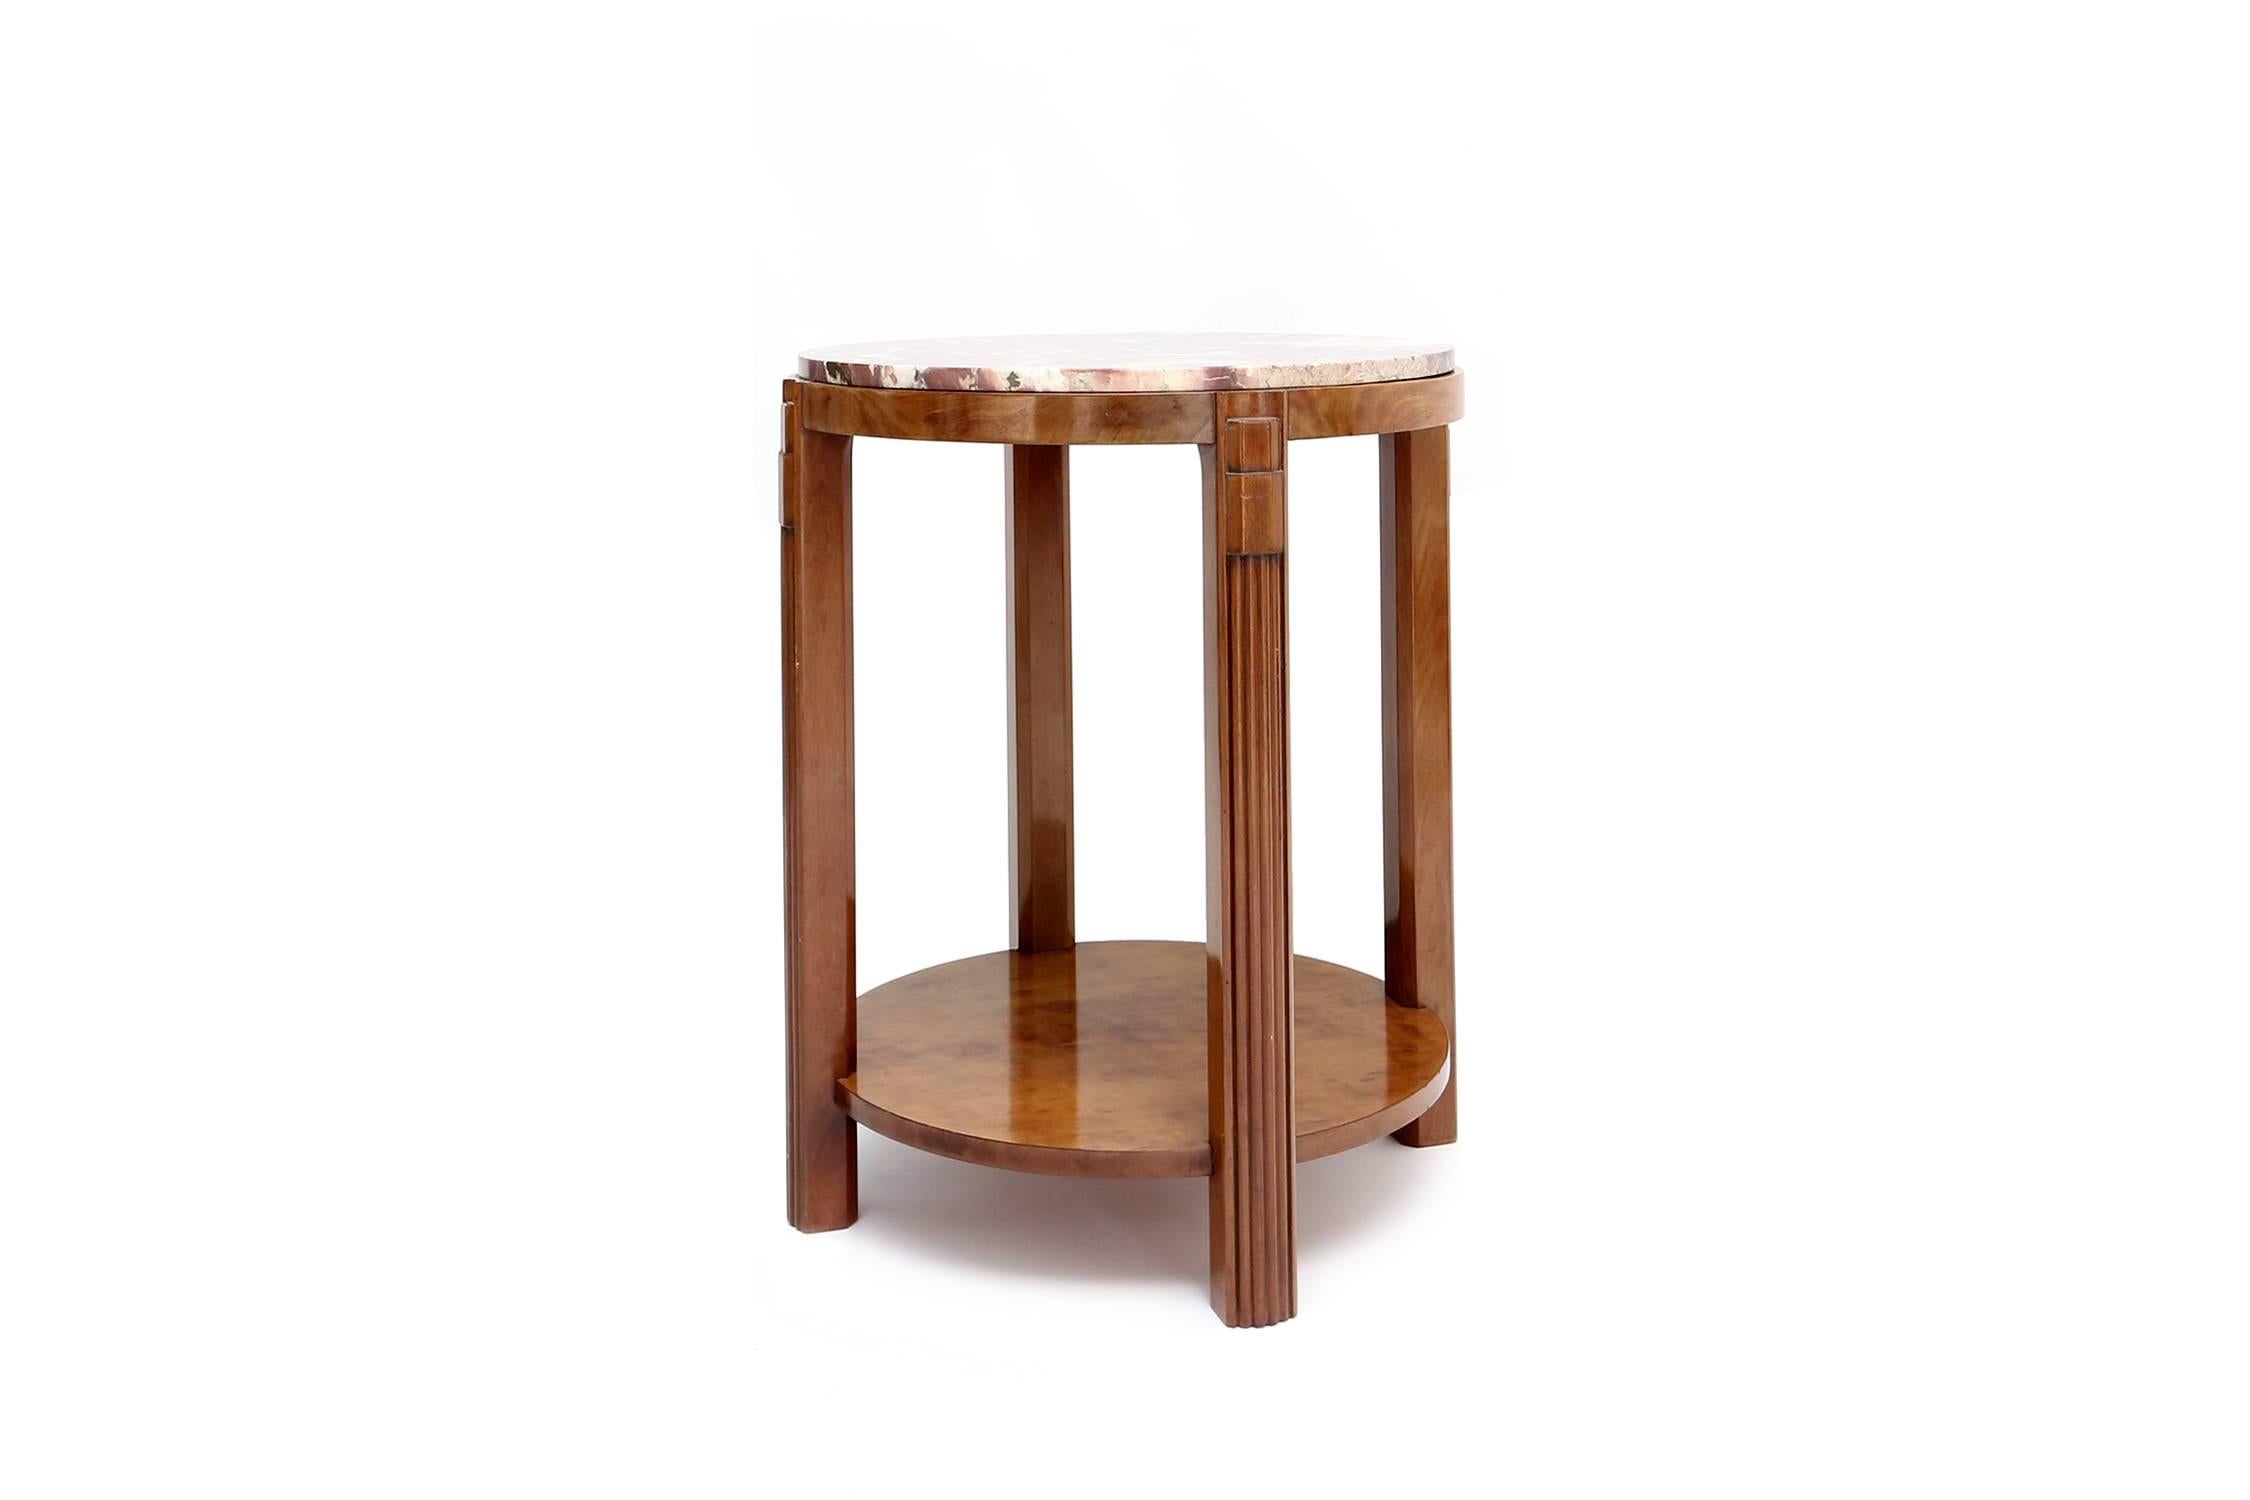 Art Deco side table
designed by Geo Bontinck
red marble mahogany.
Measures: H 70 cm, Ø 53 cm.